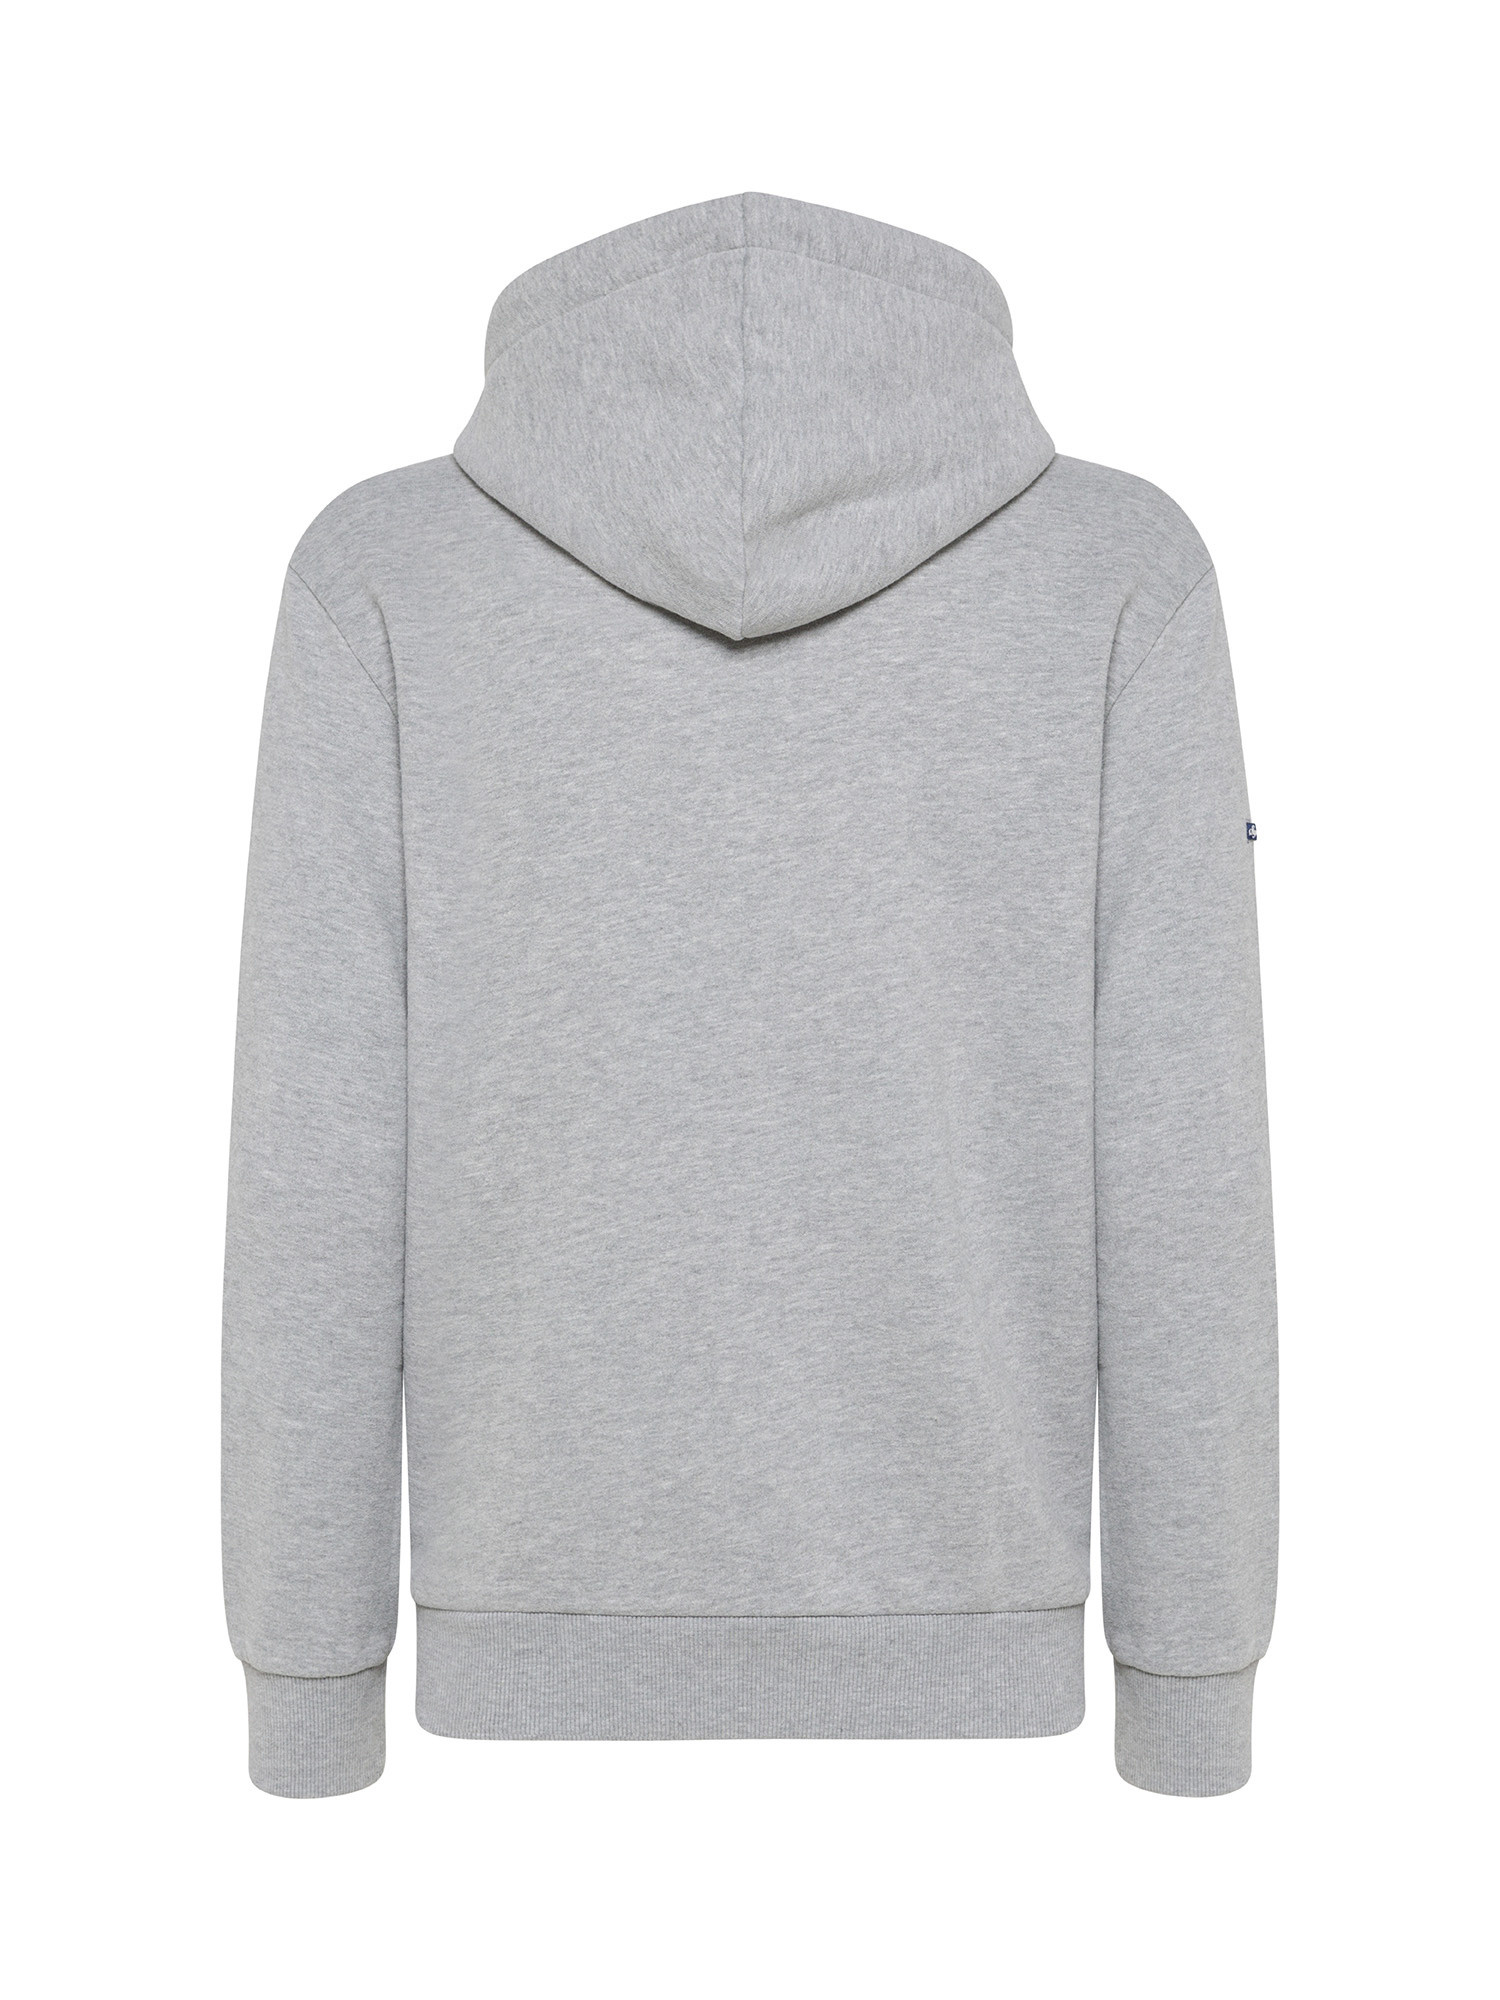 Superdry - Hooded sweatshirt with logo, Grey, large image number 1